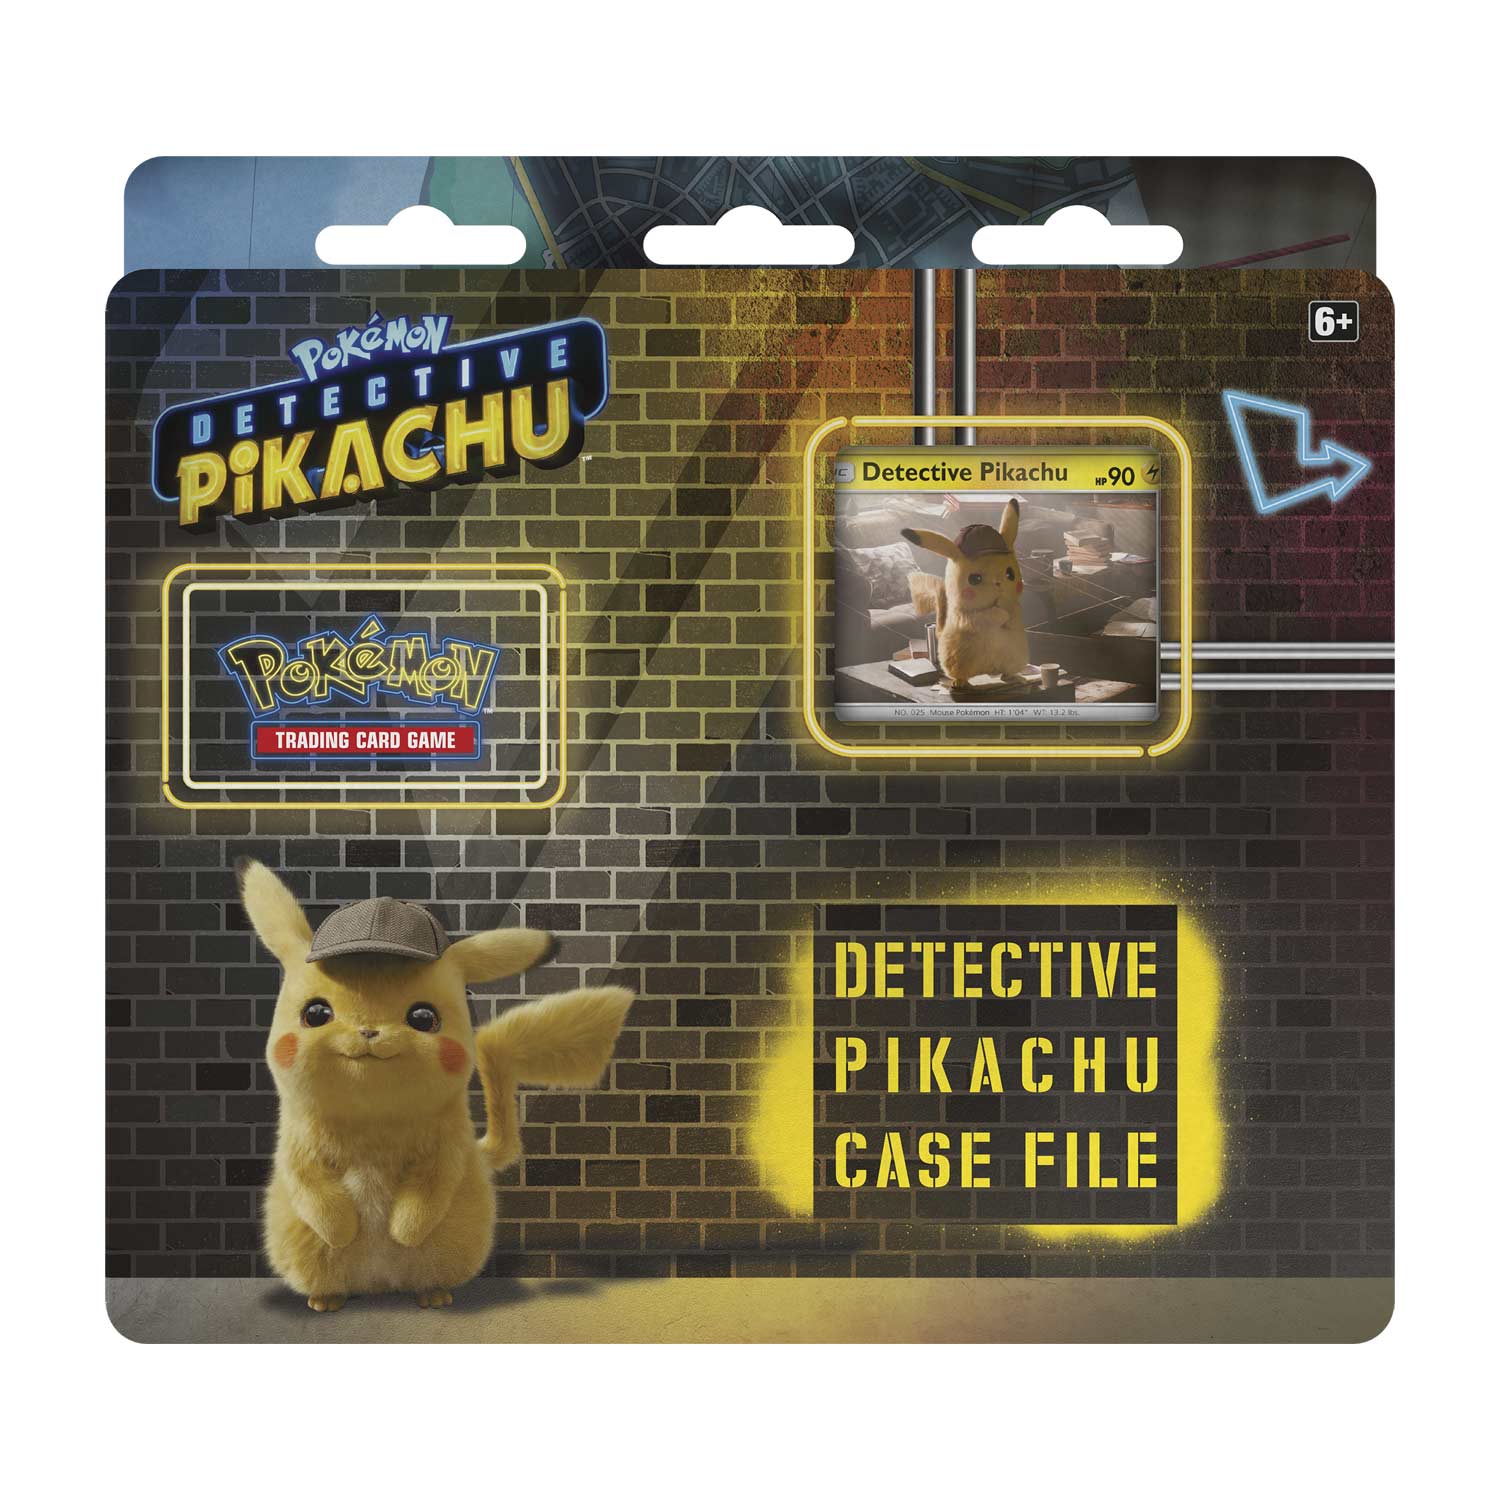 Image result for detective pikachu case file cards pack